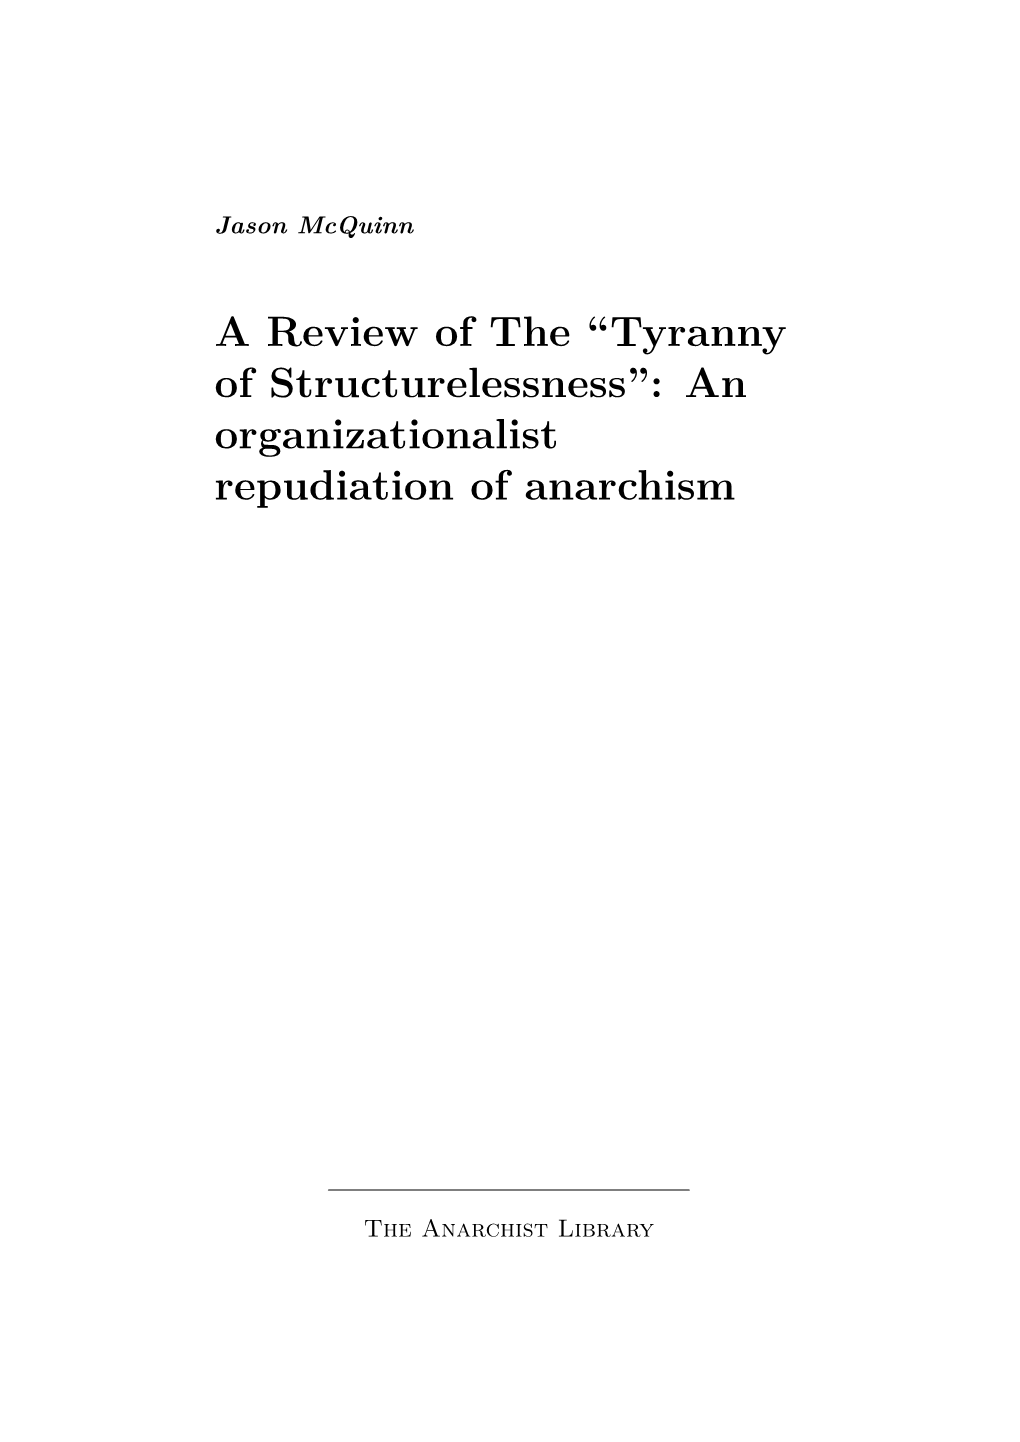 Tyranny of Structurelessness”: an Organizationalist Repudiation of Anarchism